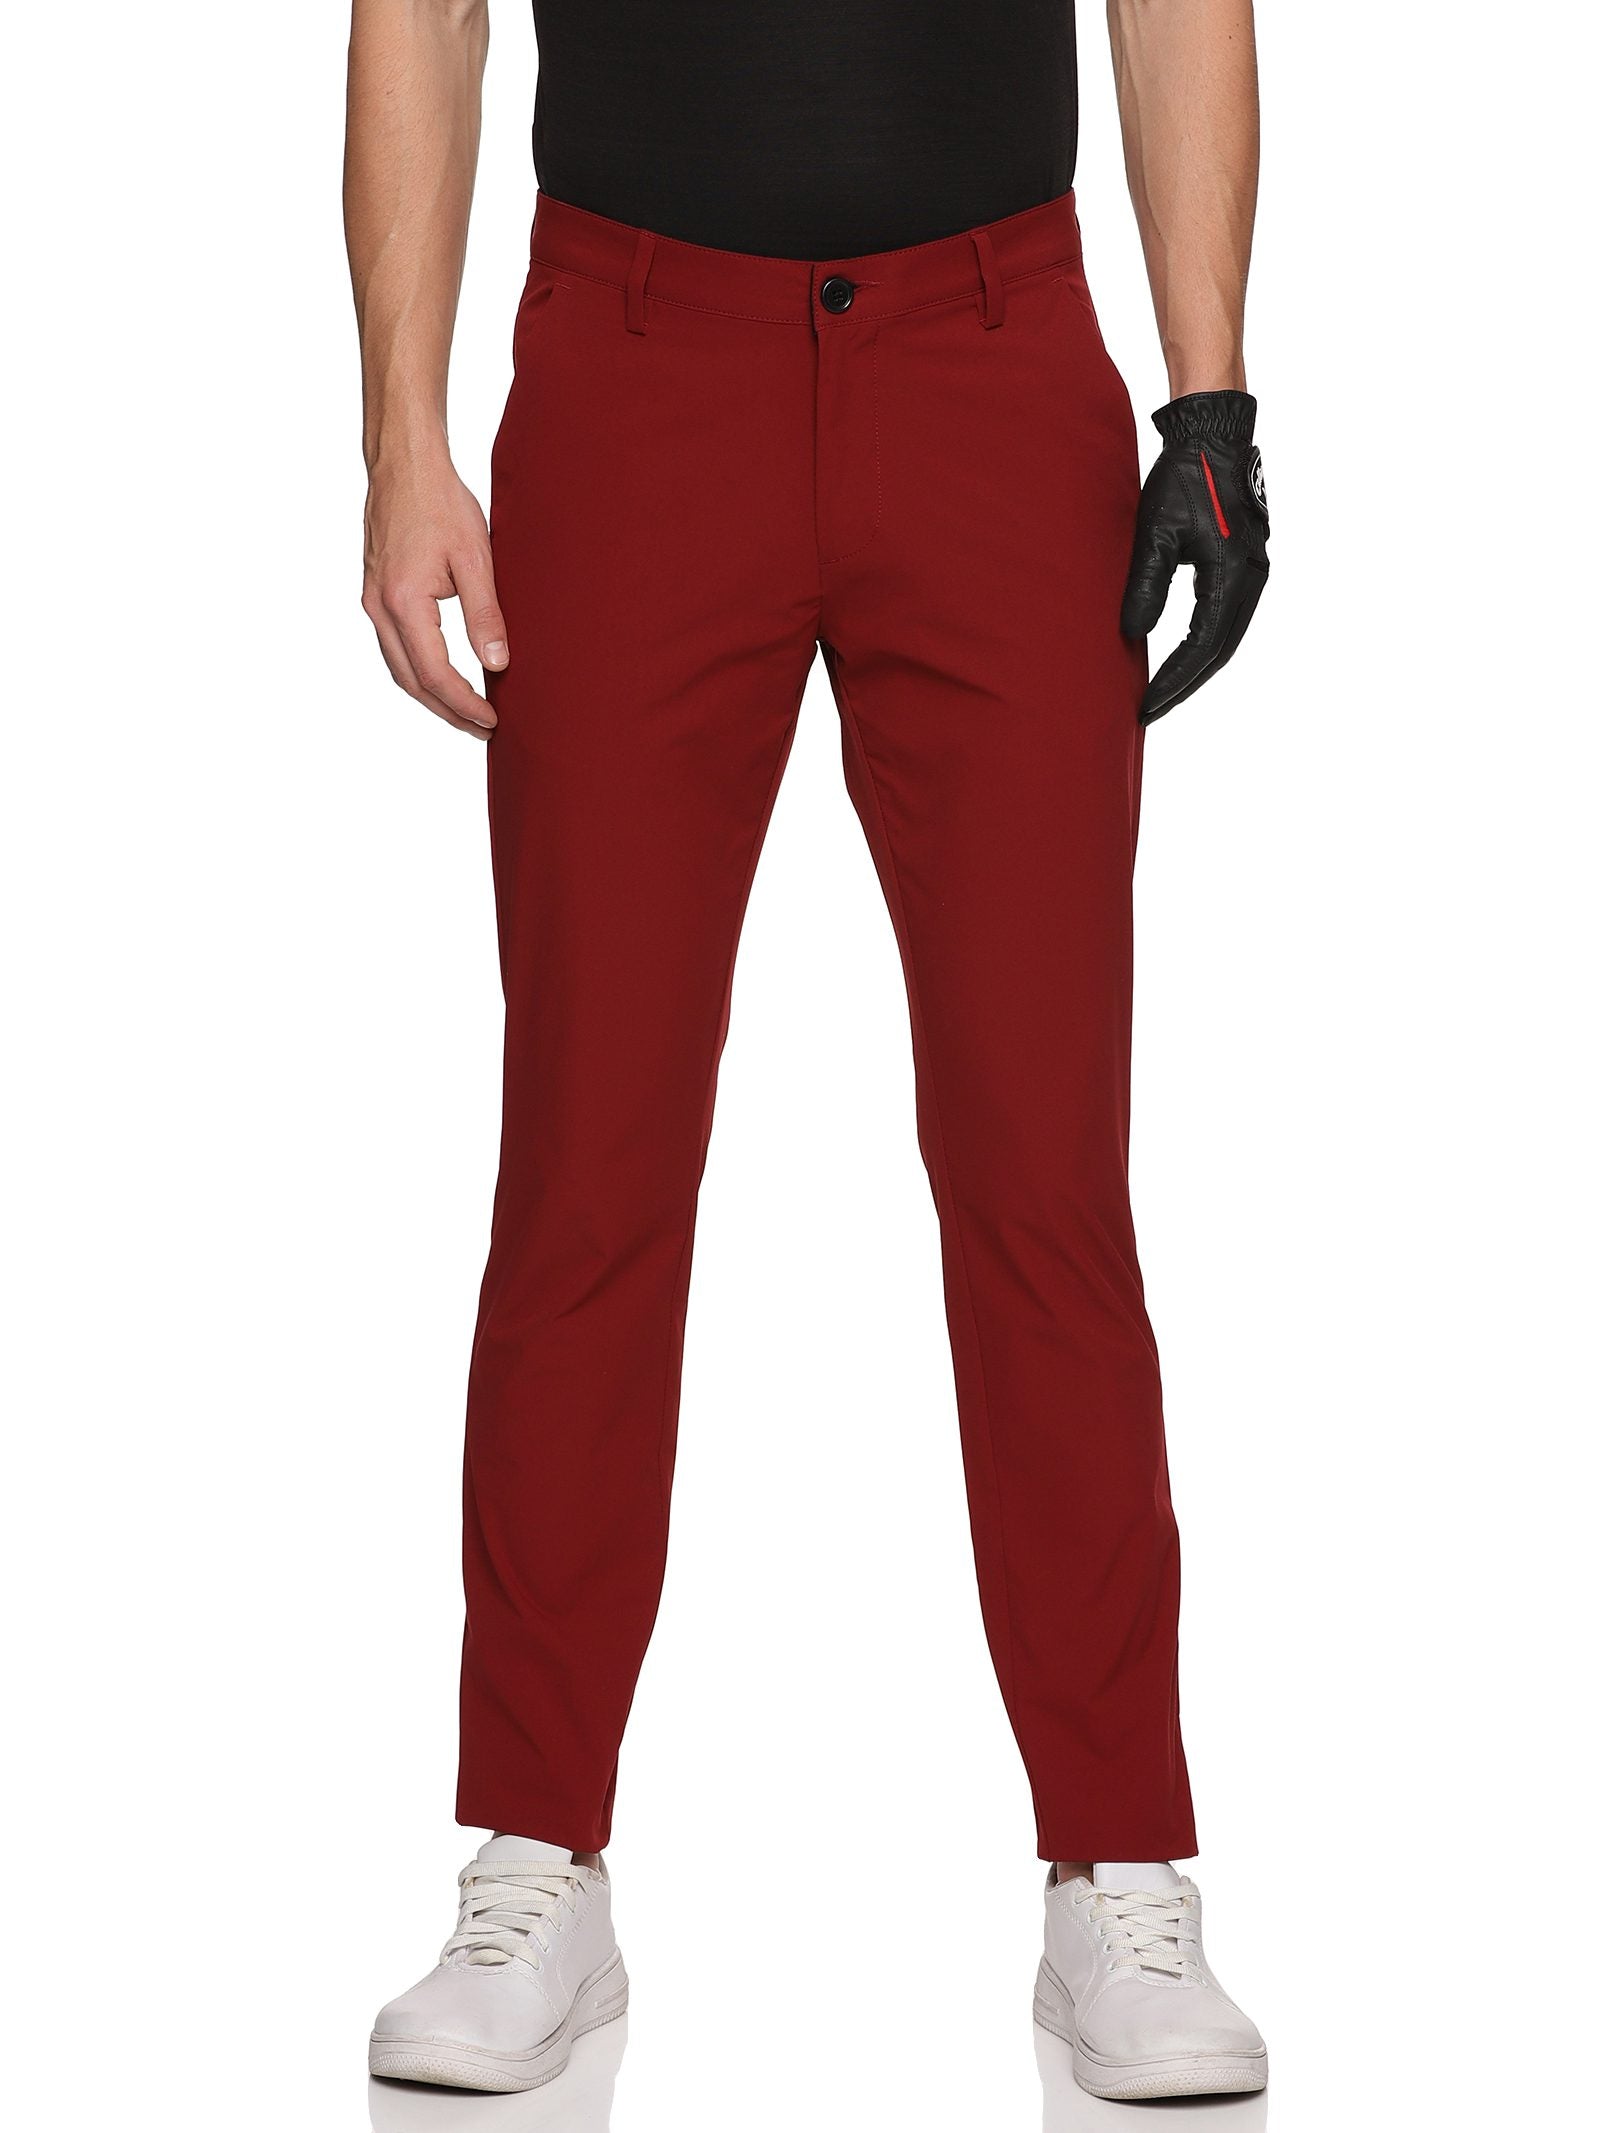 Styzen Boy’s Active Golf Trousers (Flexi-Waist)